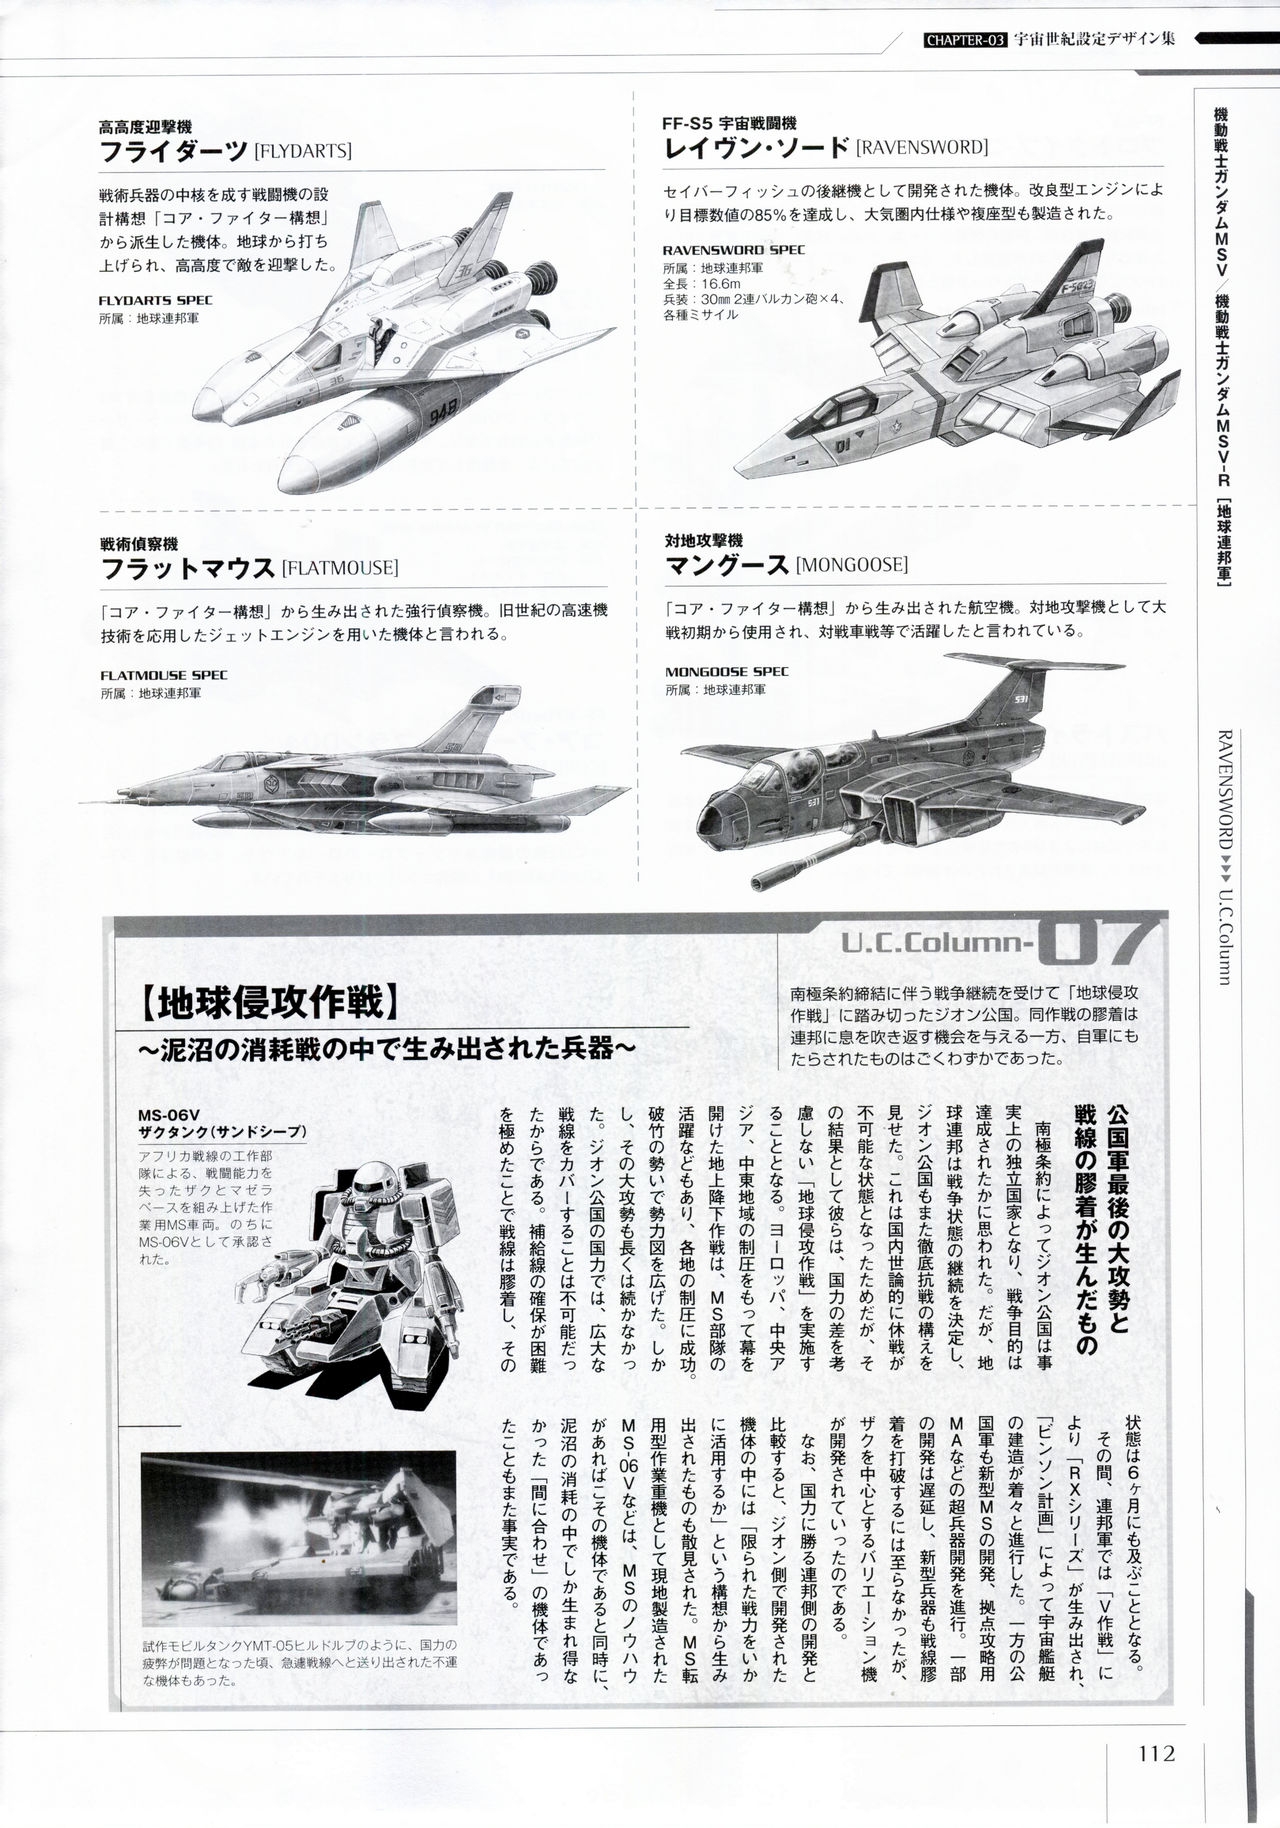 Mobile Suit Gundam - Ship & Aerospace Plane Encyclopedia - Revised Edition 117